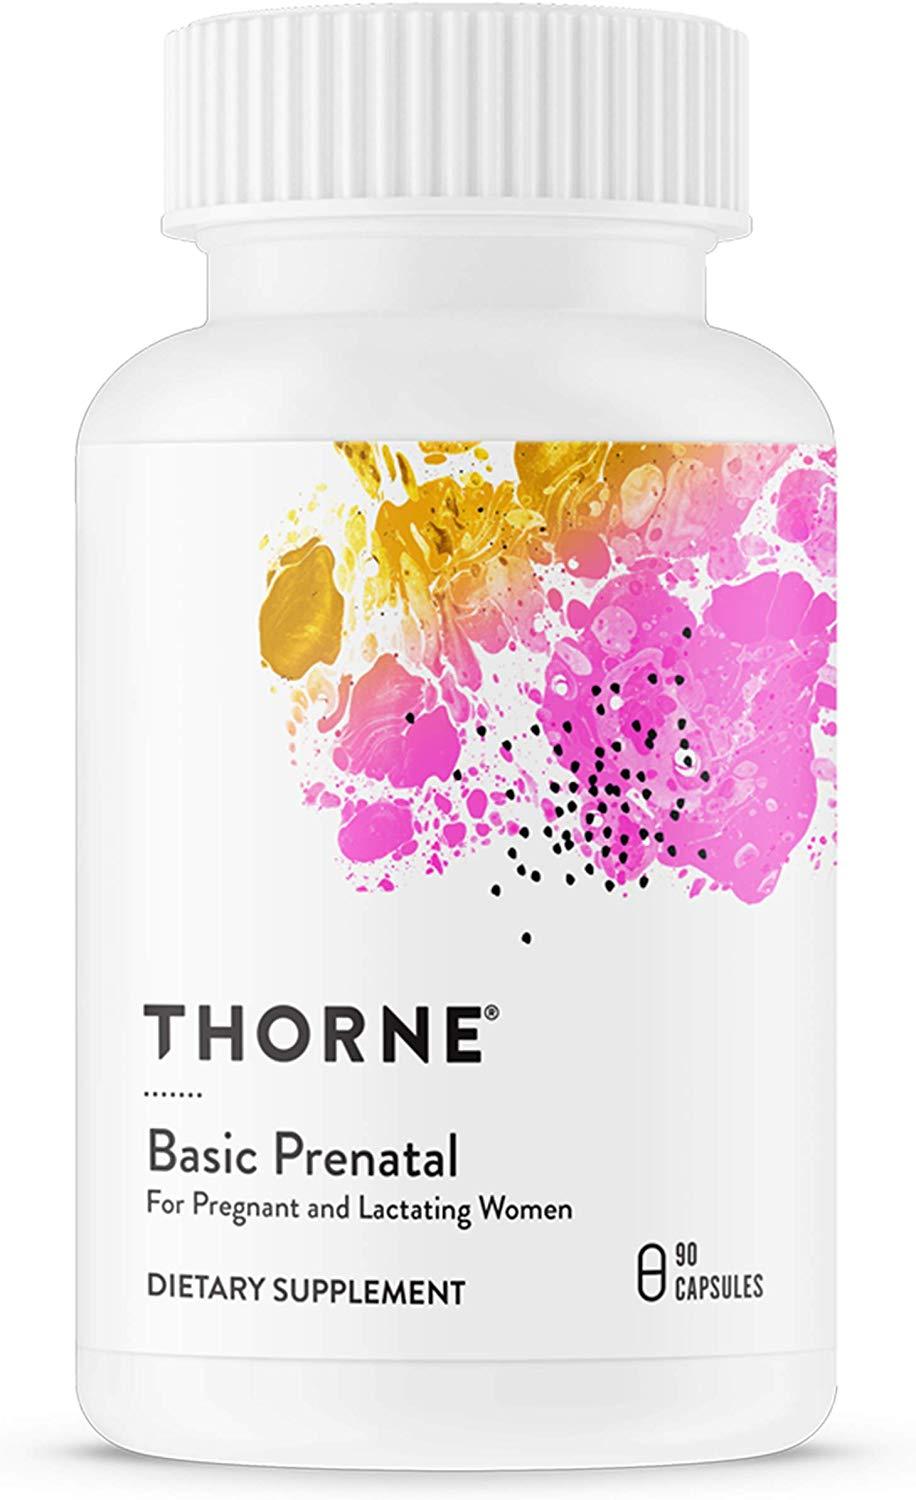 Best prenatal vitamins and supplements of 2020— Thorne Basic Prenatal